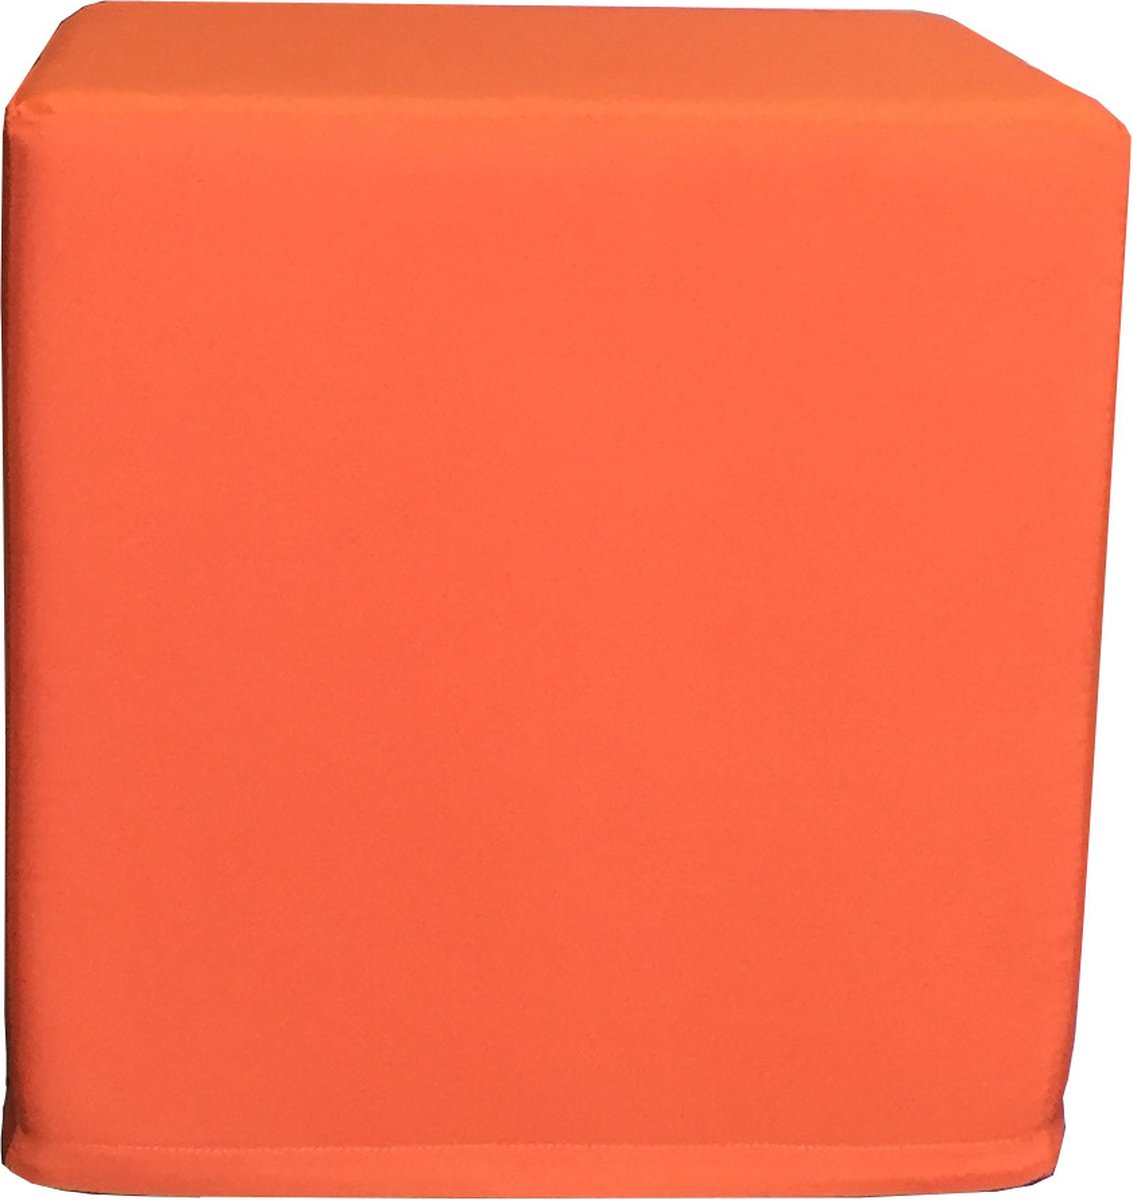 Tubbli Poef oranje kind 30 centimeter kinder waterproof vele kleuren zeer sterk.